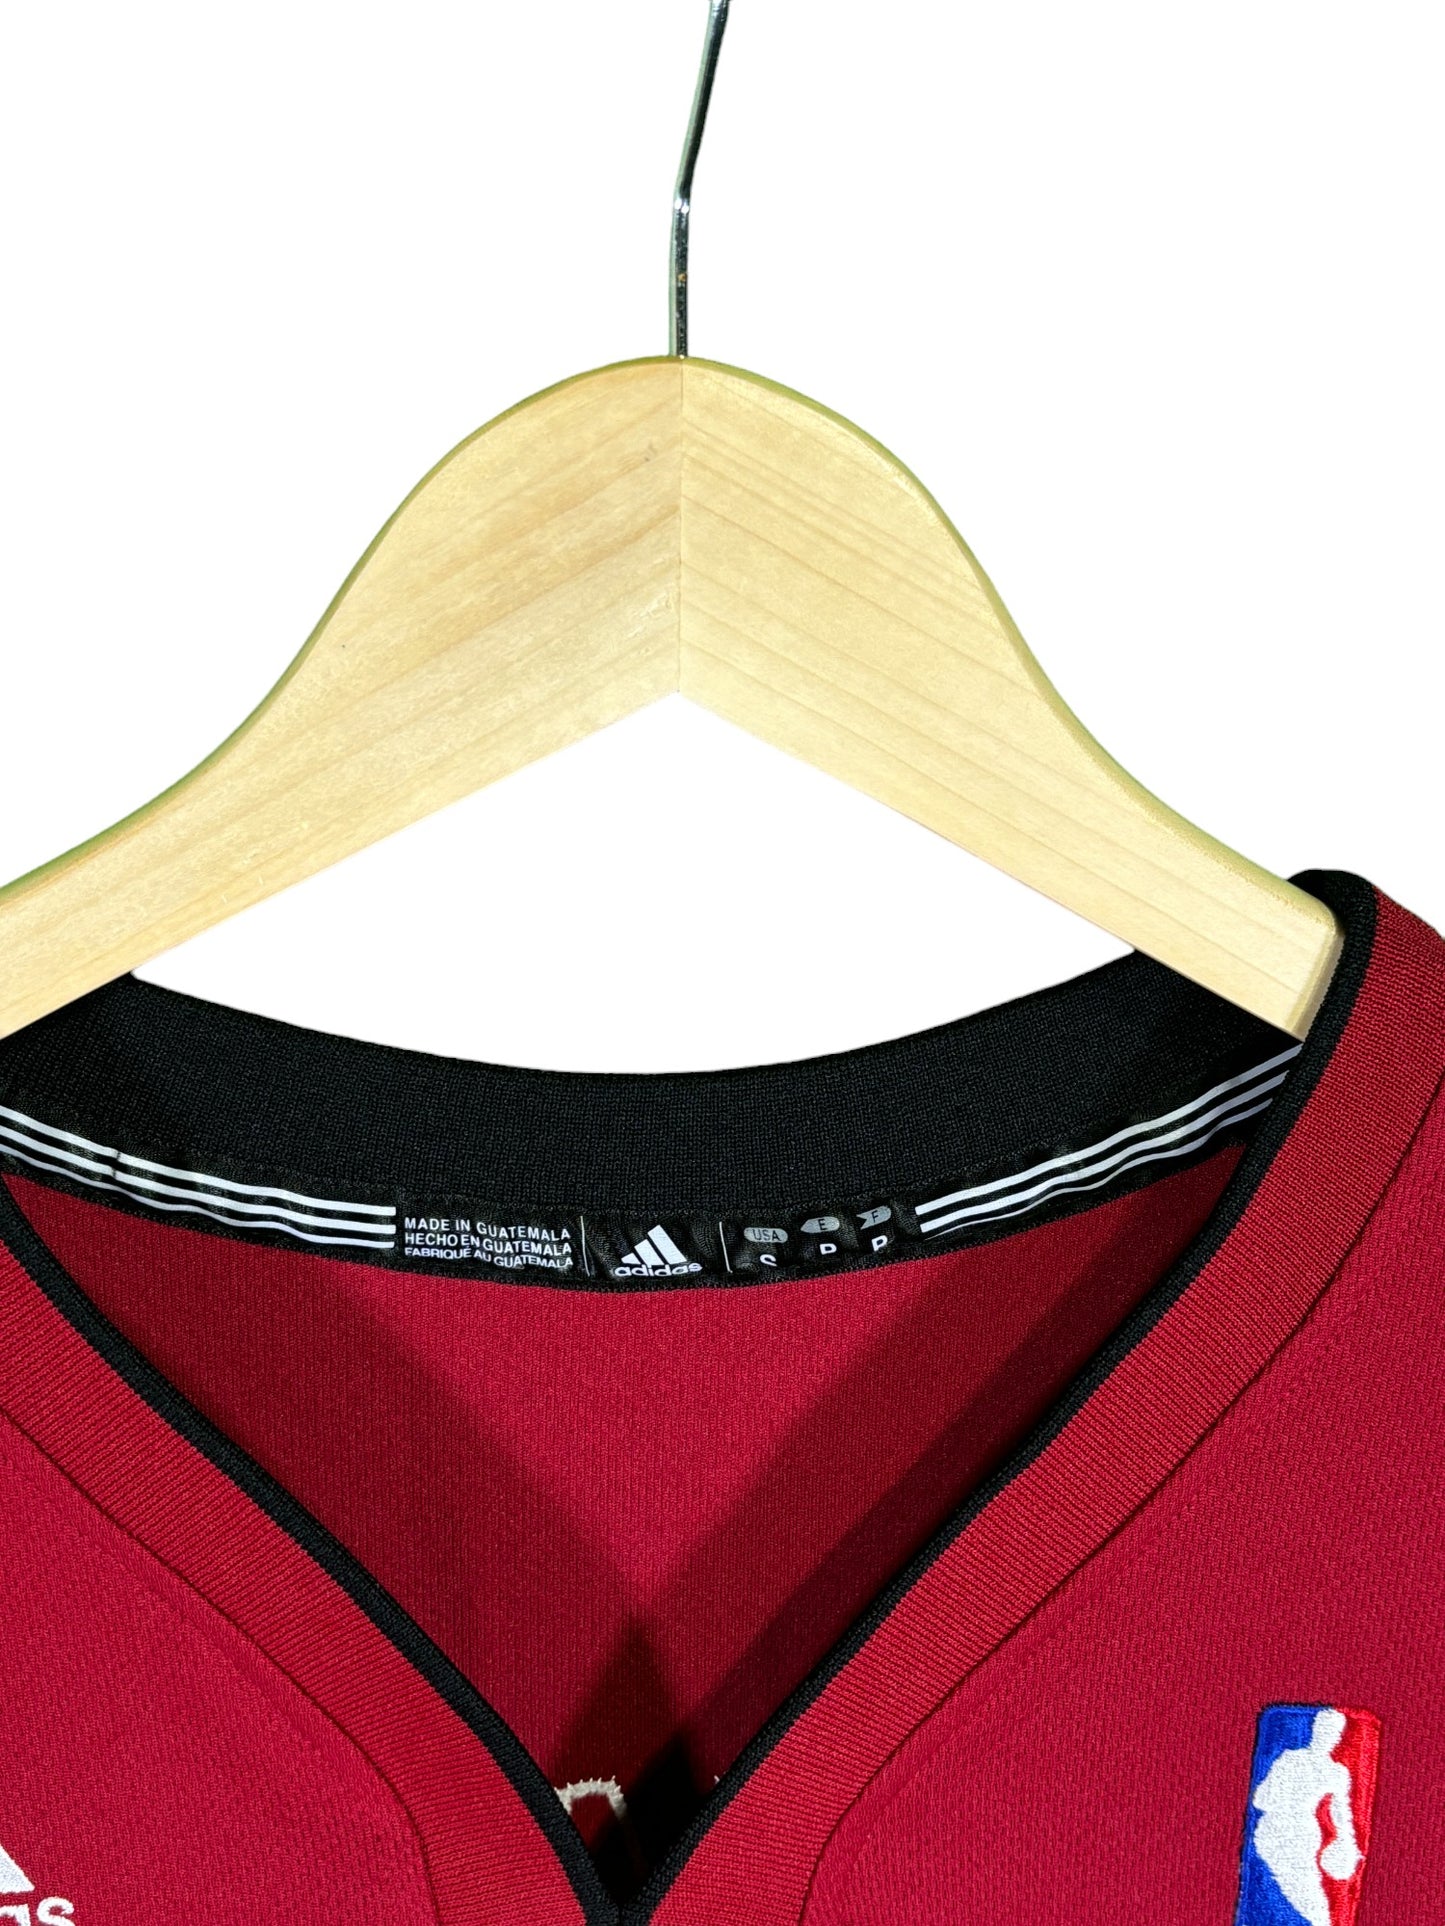 Adidas Miami Heat Lebron James #6 Red Stitched Jersey Size Small